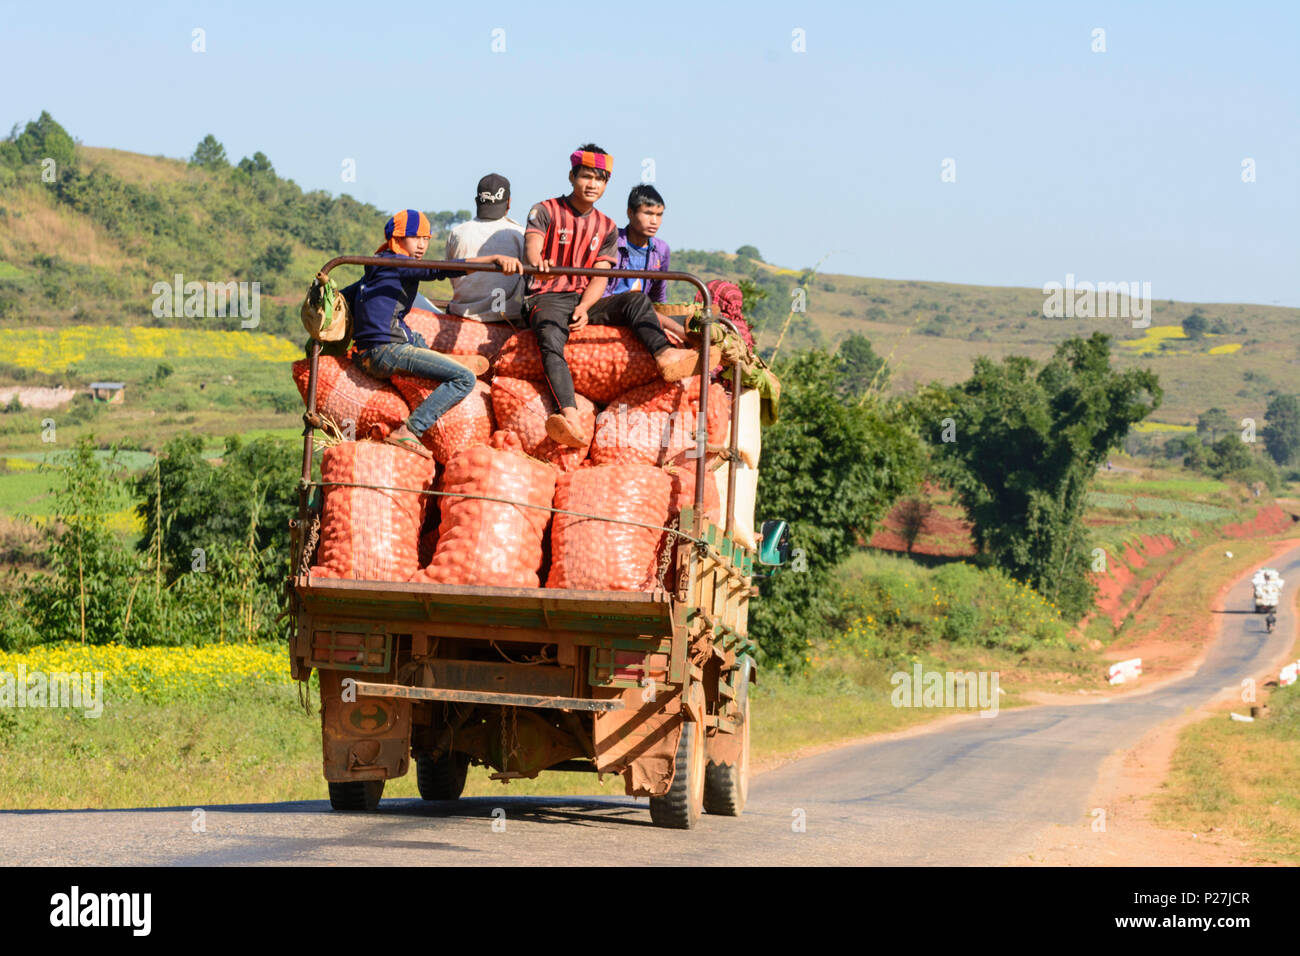 Kalaw, rural road, truck, bags with oranges, Shan State, Myanmar (Burma) Stock Photo